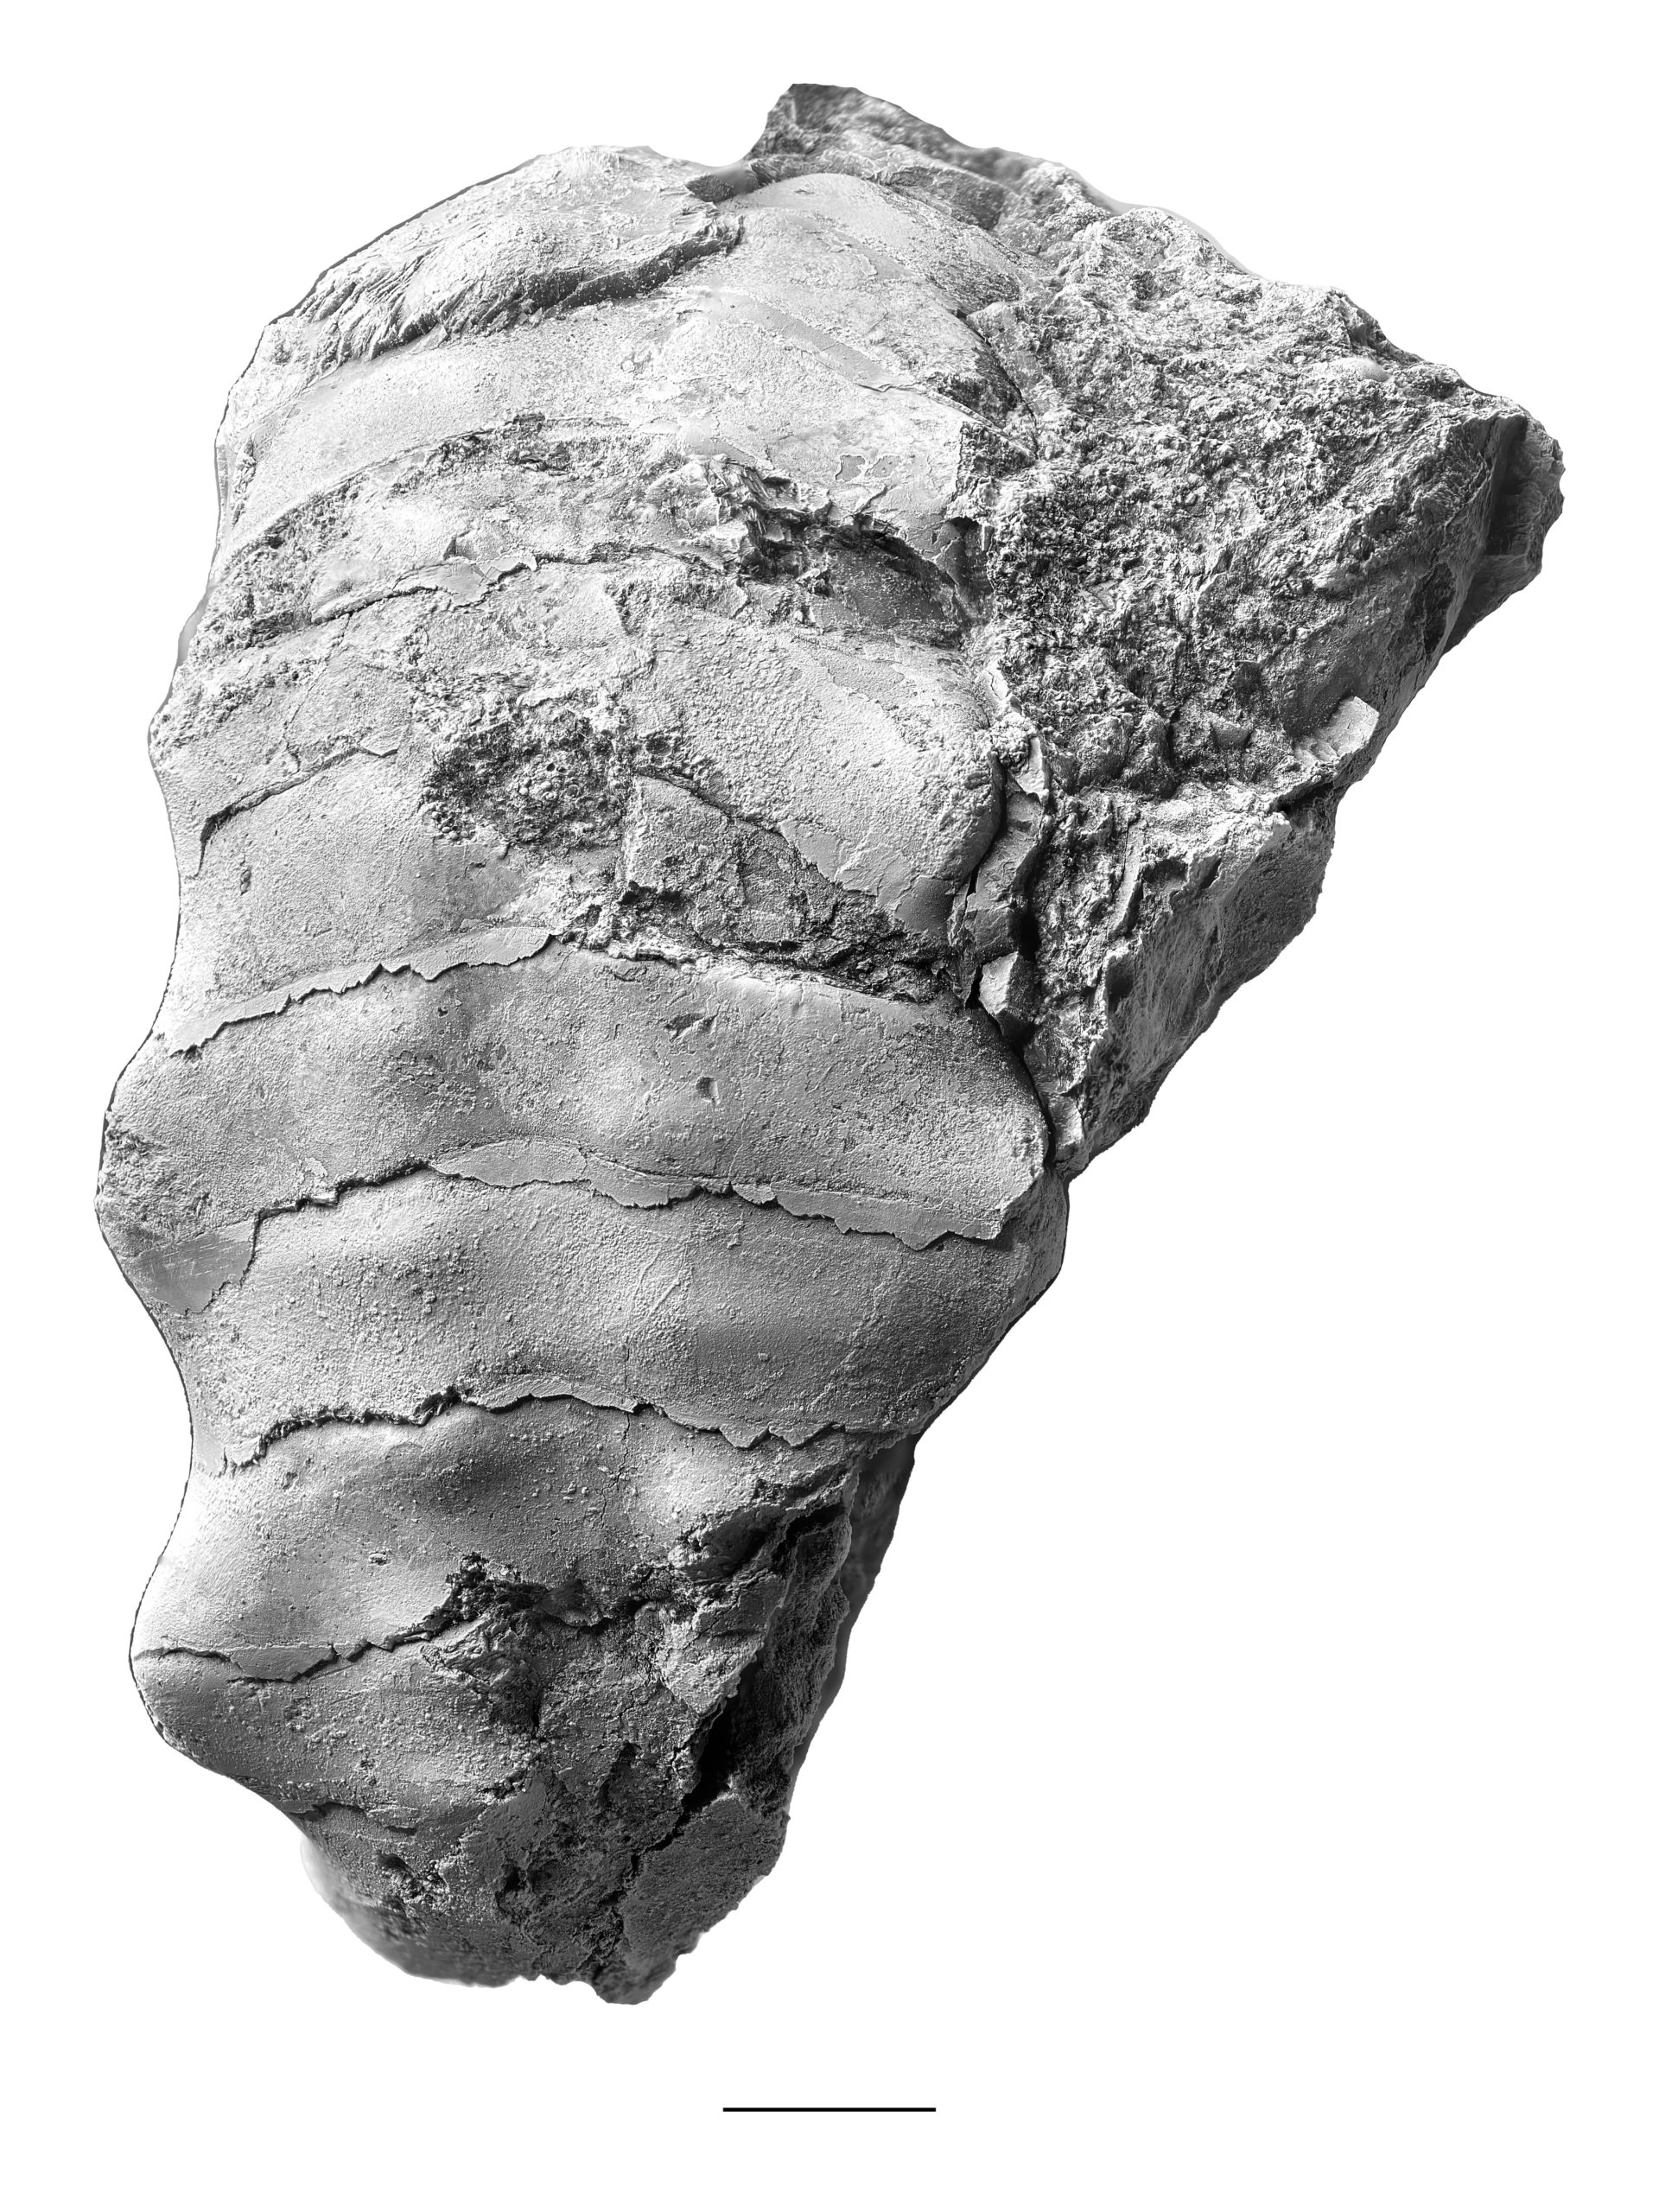 Tainoceras sp. from the Portersville Limestone